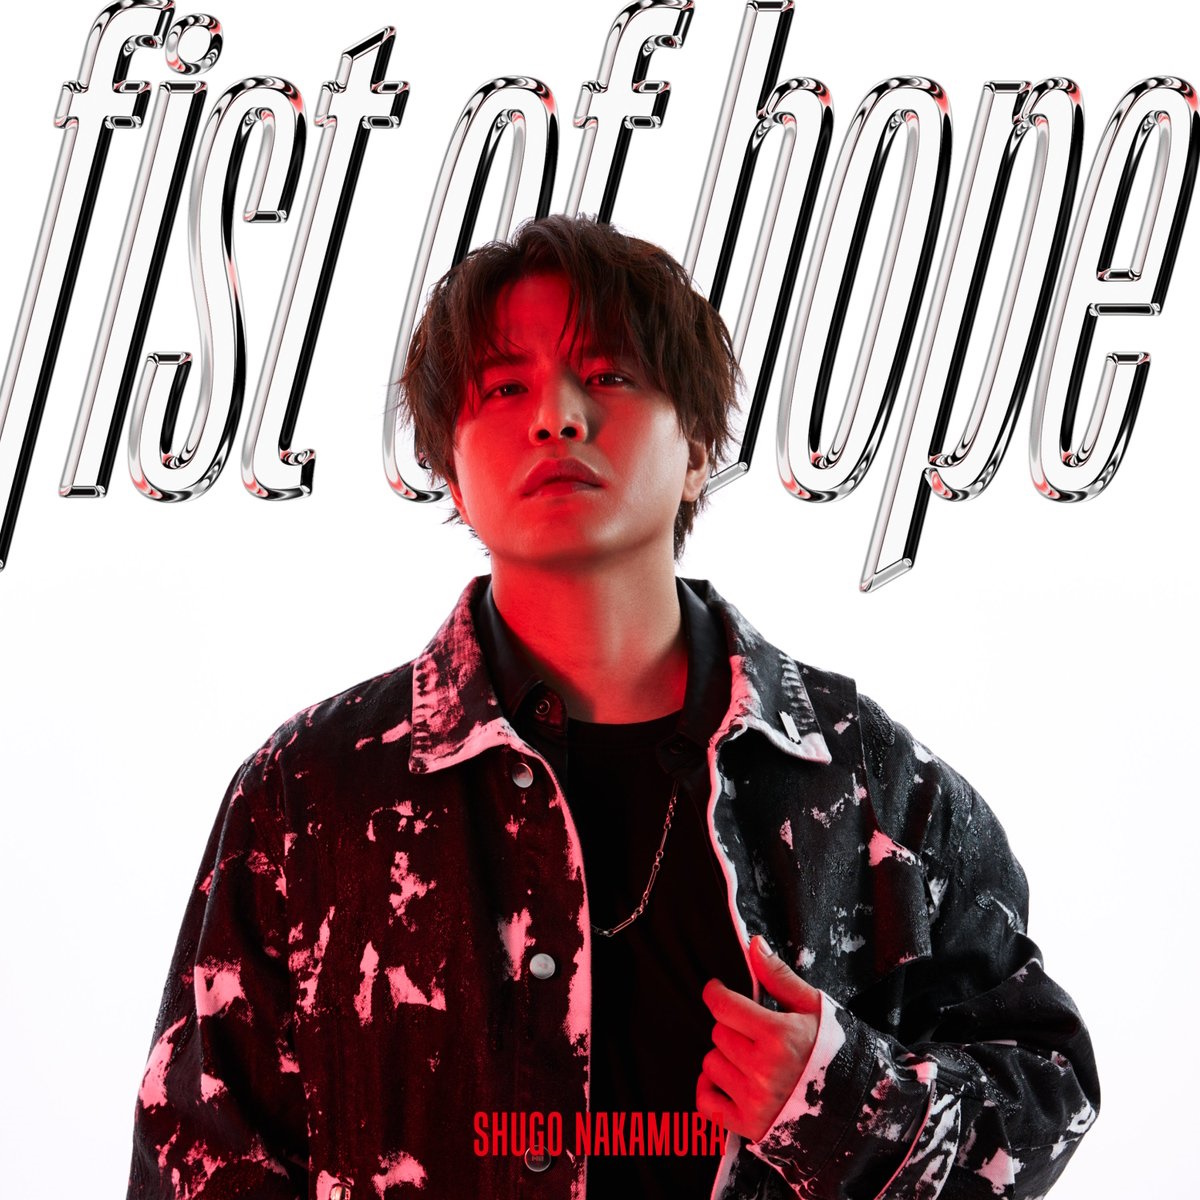 Cover art for『Shugo Nakamura - fist of hope』from the release『fist of hope』